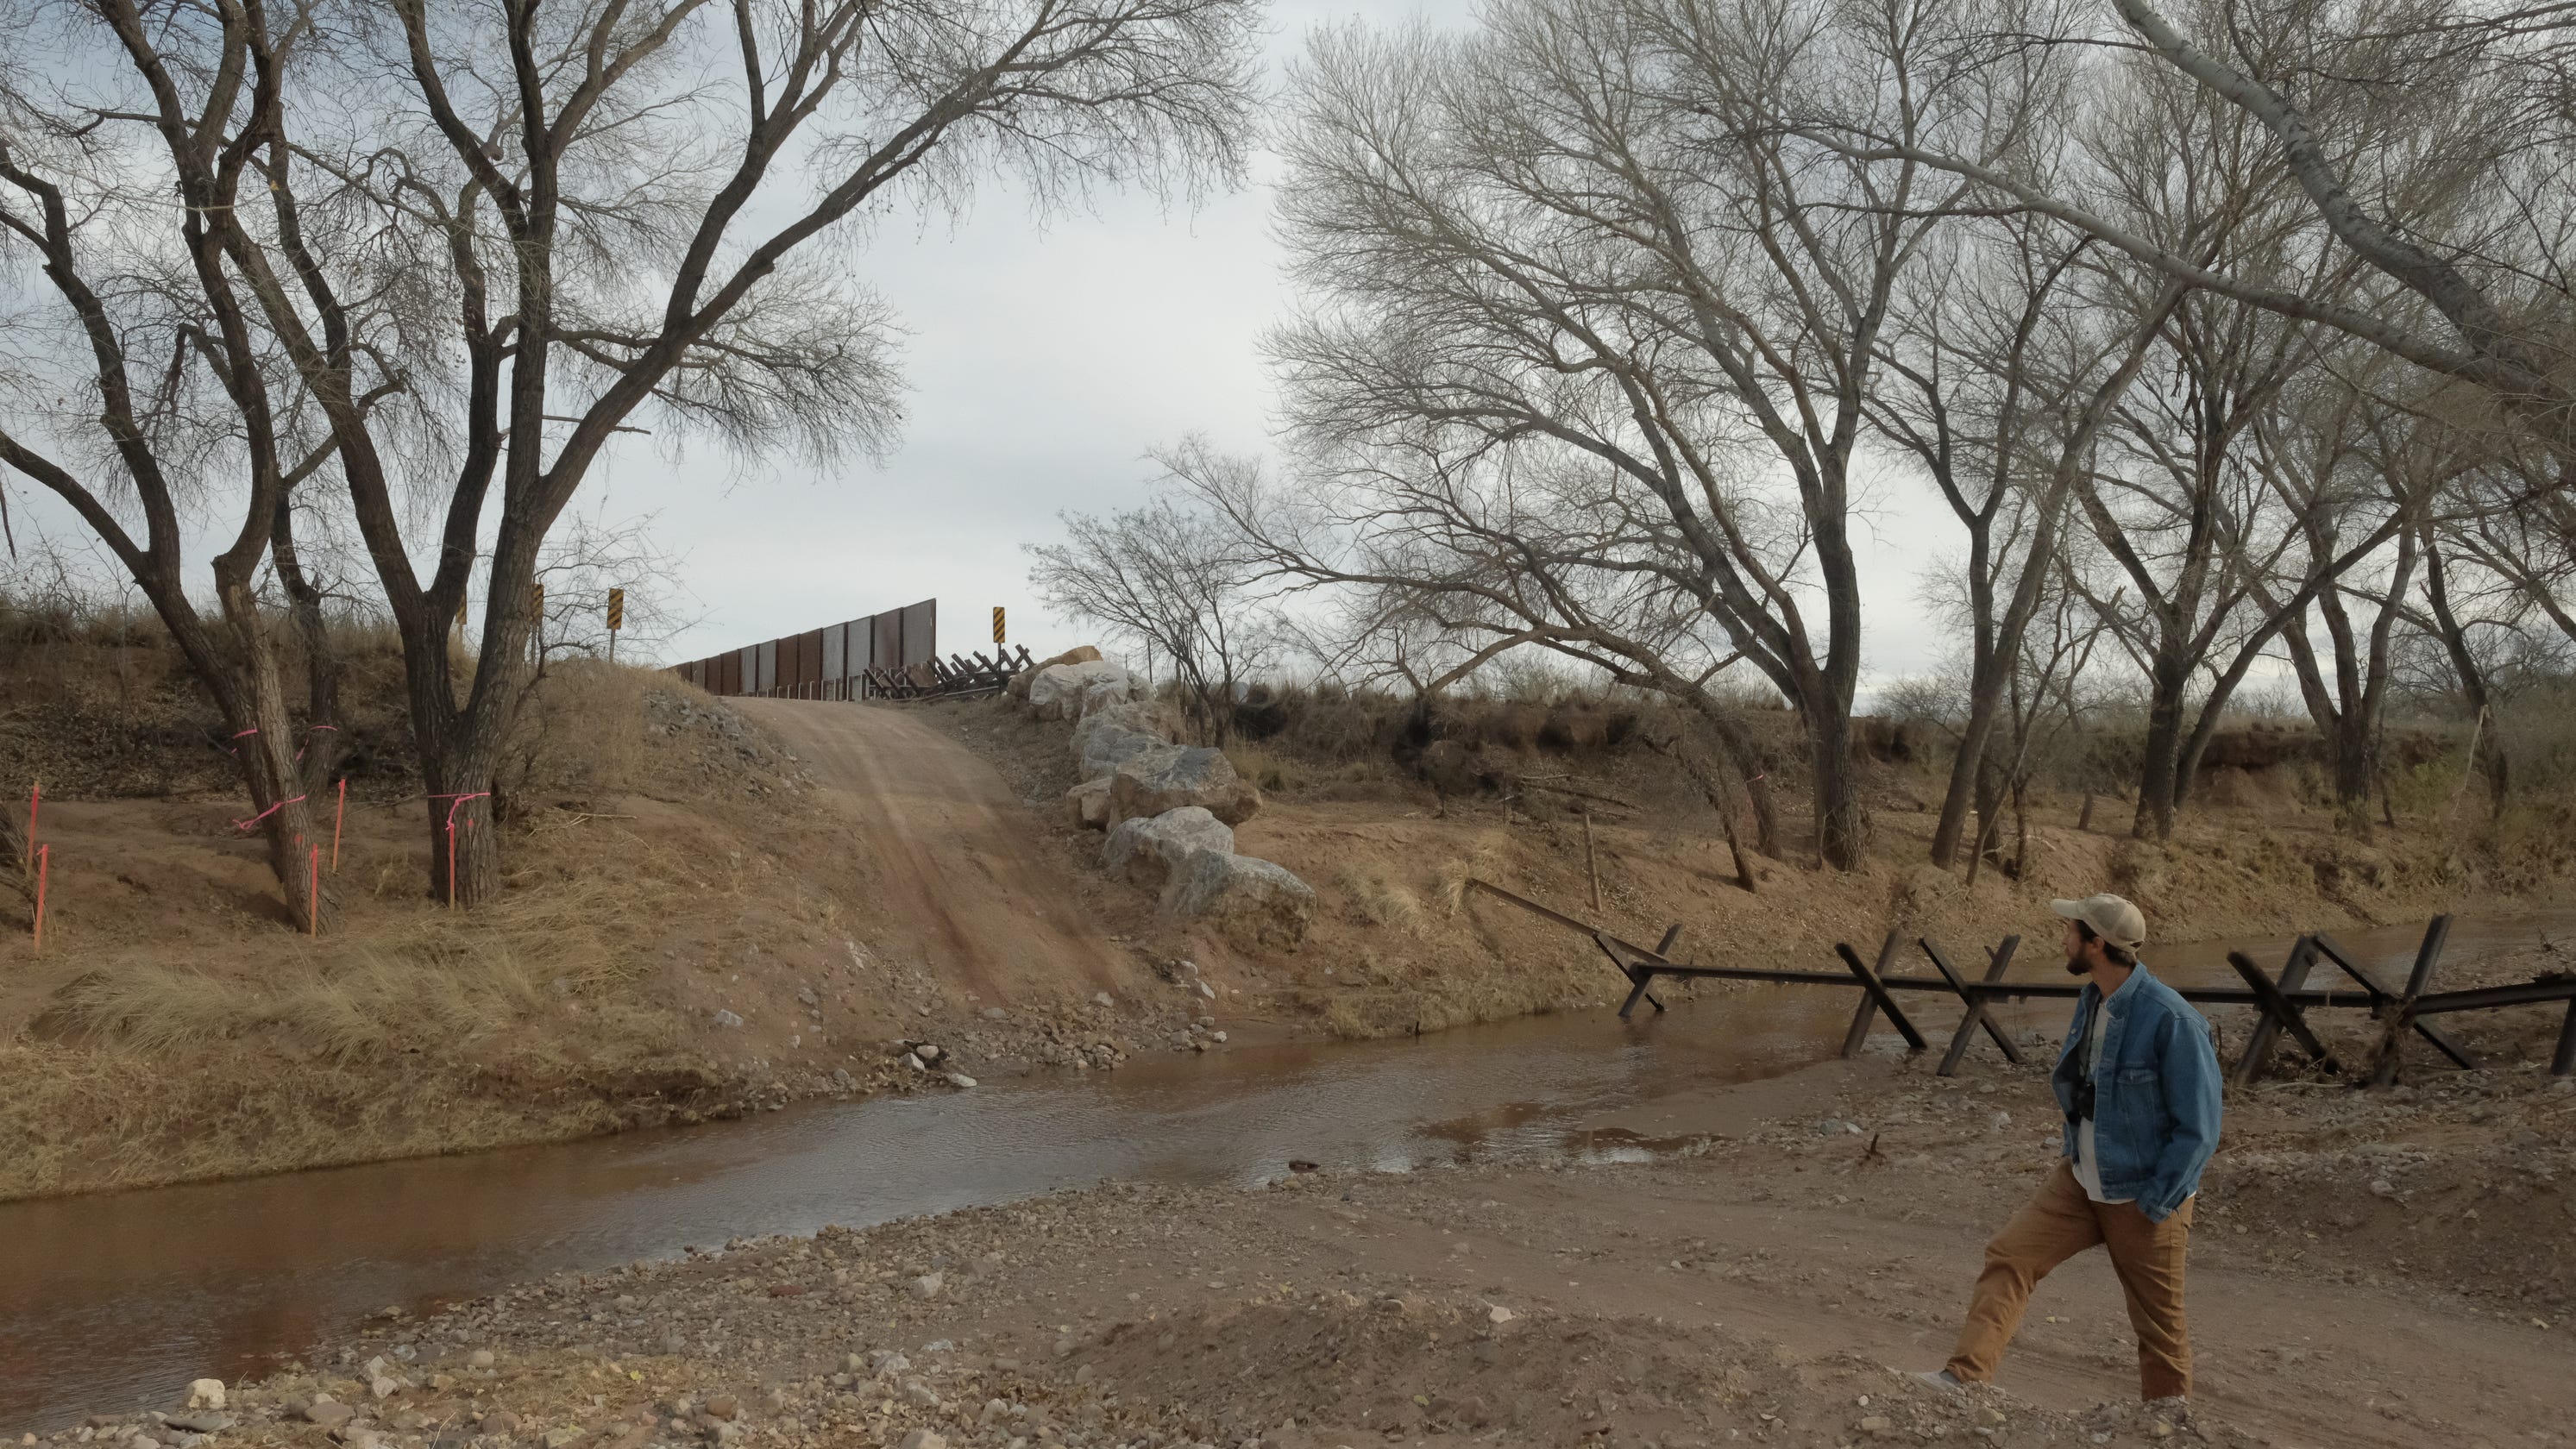 Concerns grow that Trump's wall will damage rivers, wildlife habitat on Arizona border - AZCentral